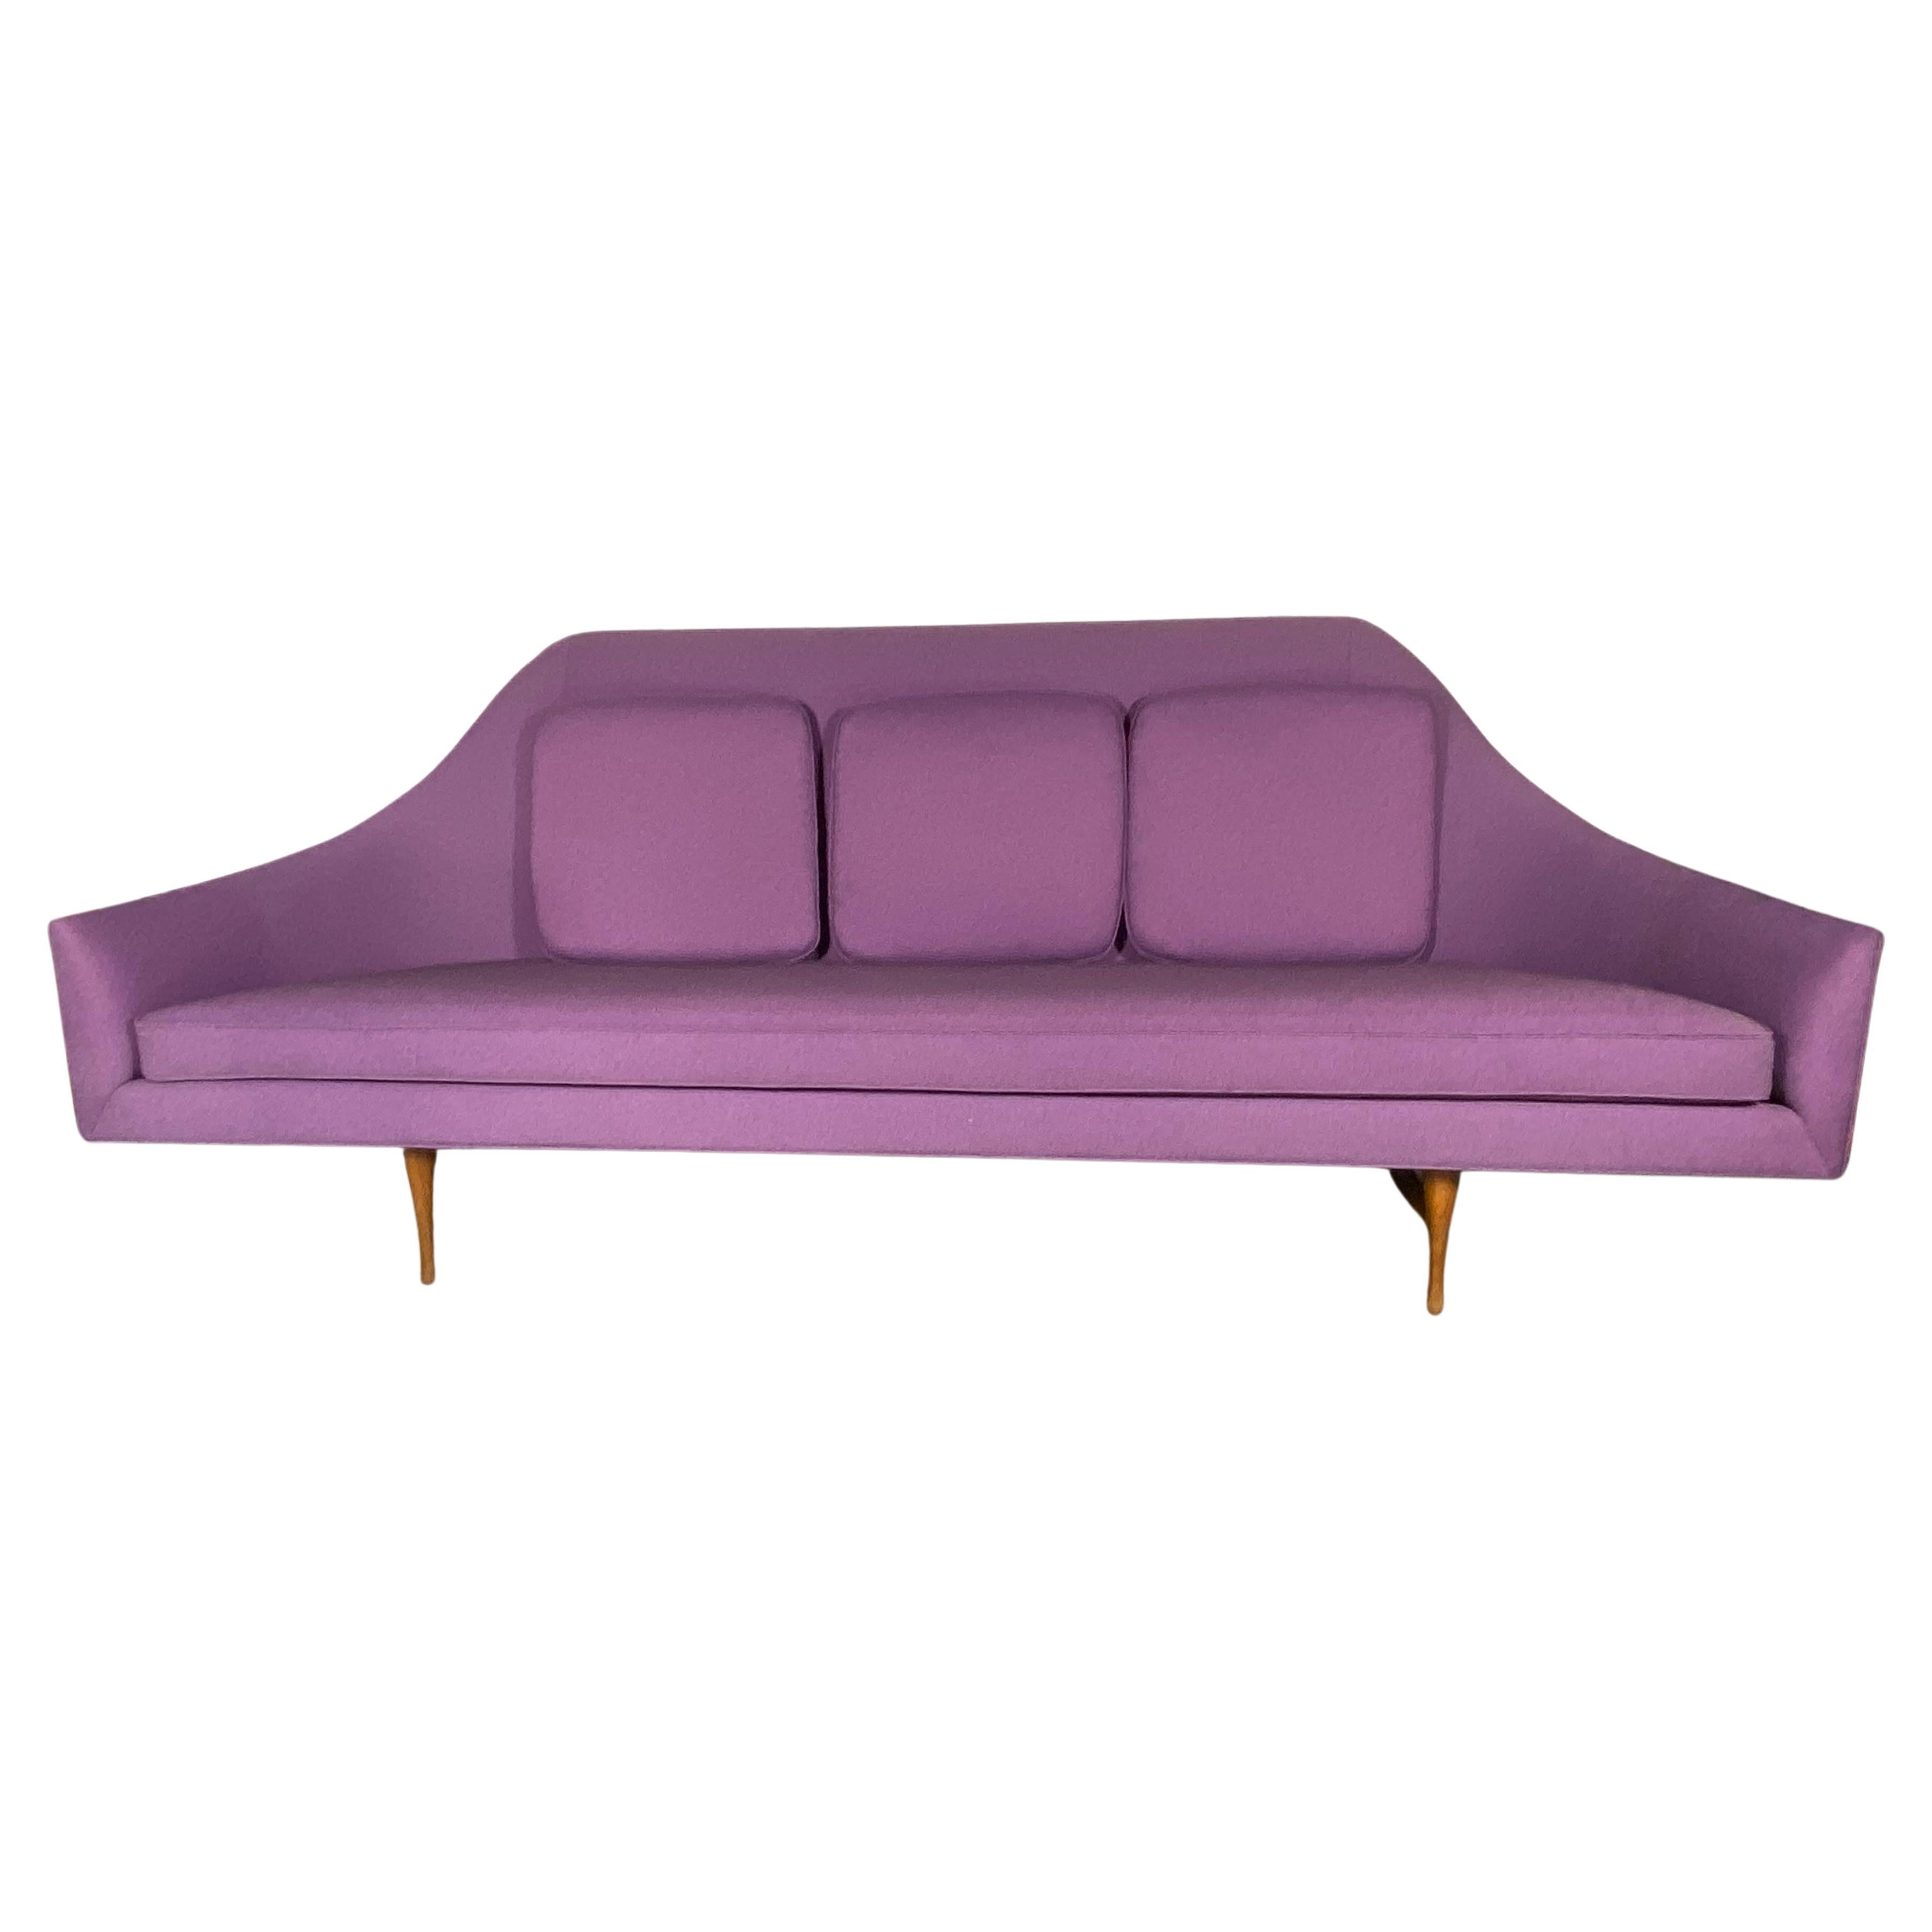 Stunning Paul McCobb Symmetric Group Sofa for Widdicomb